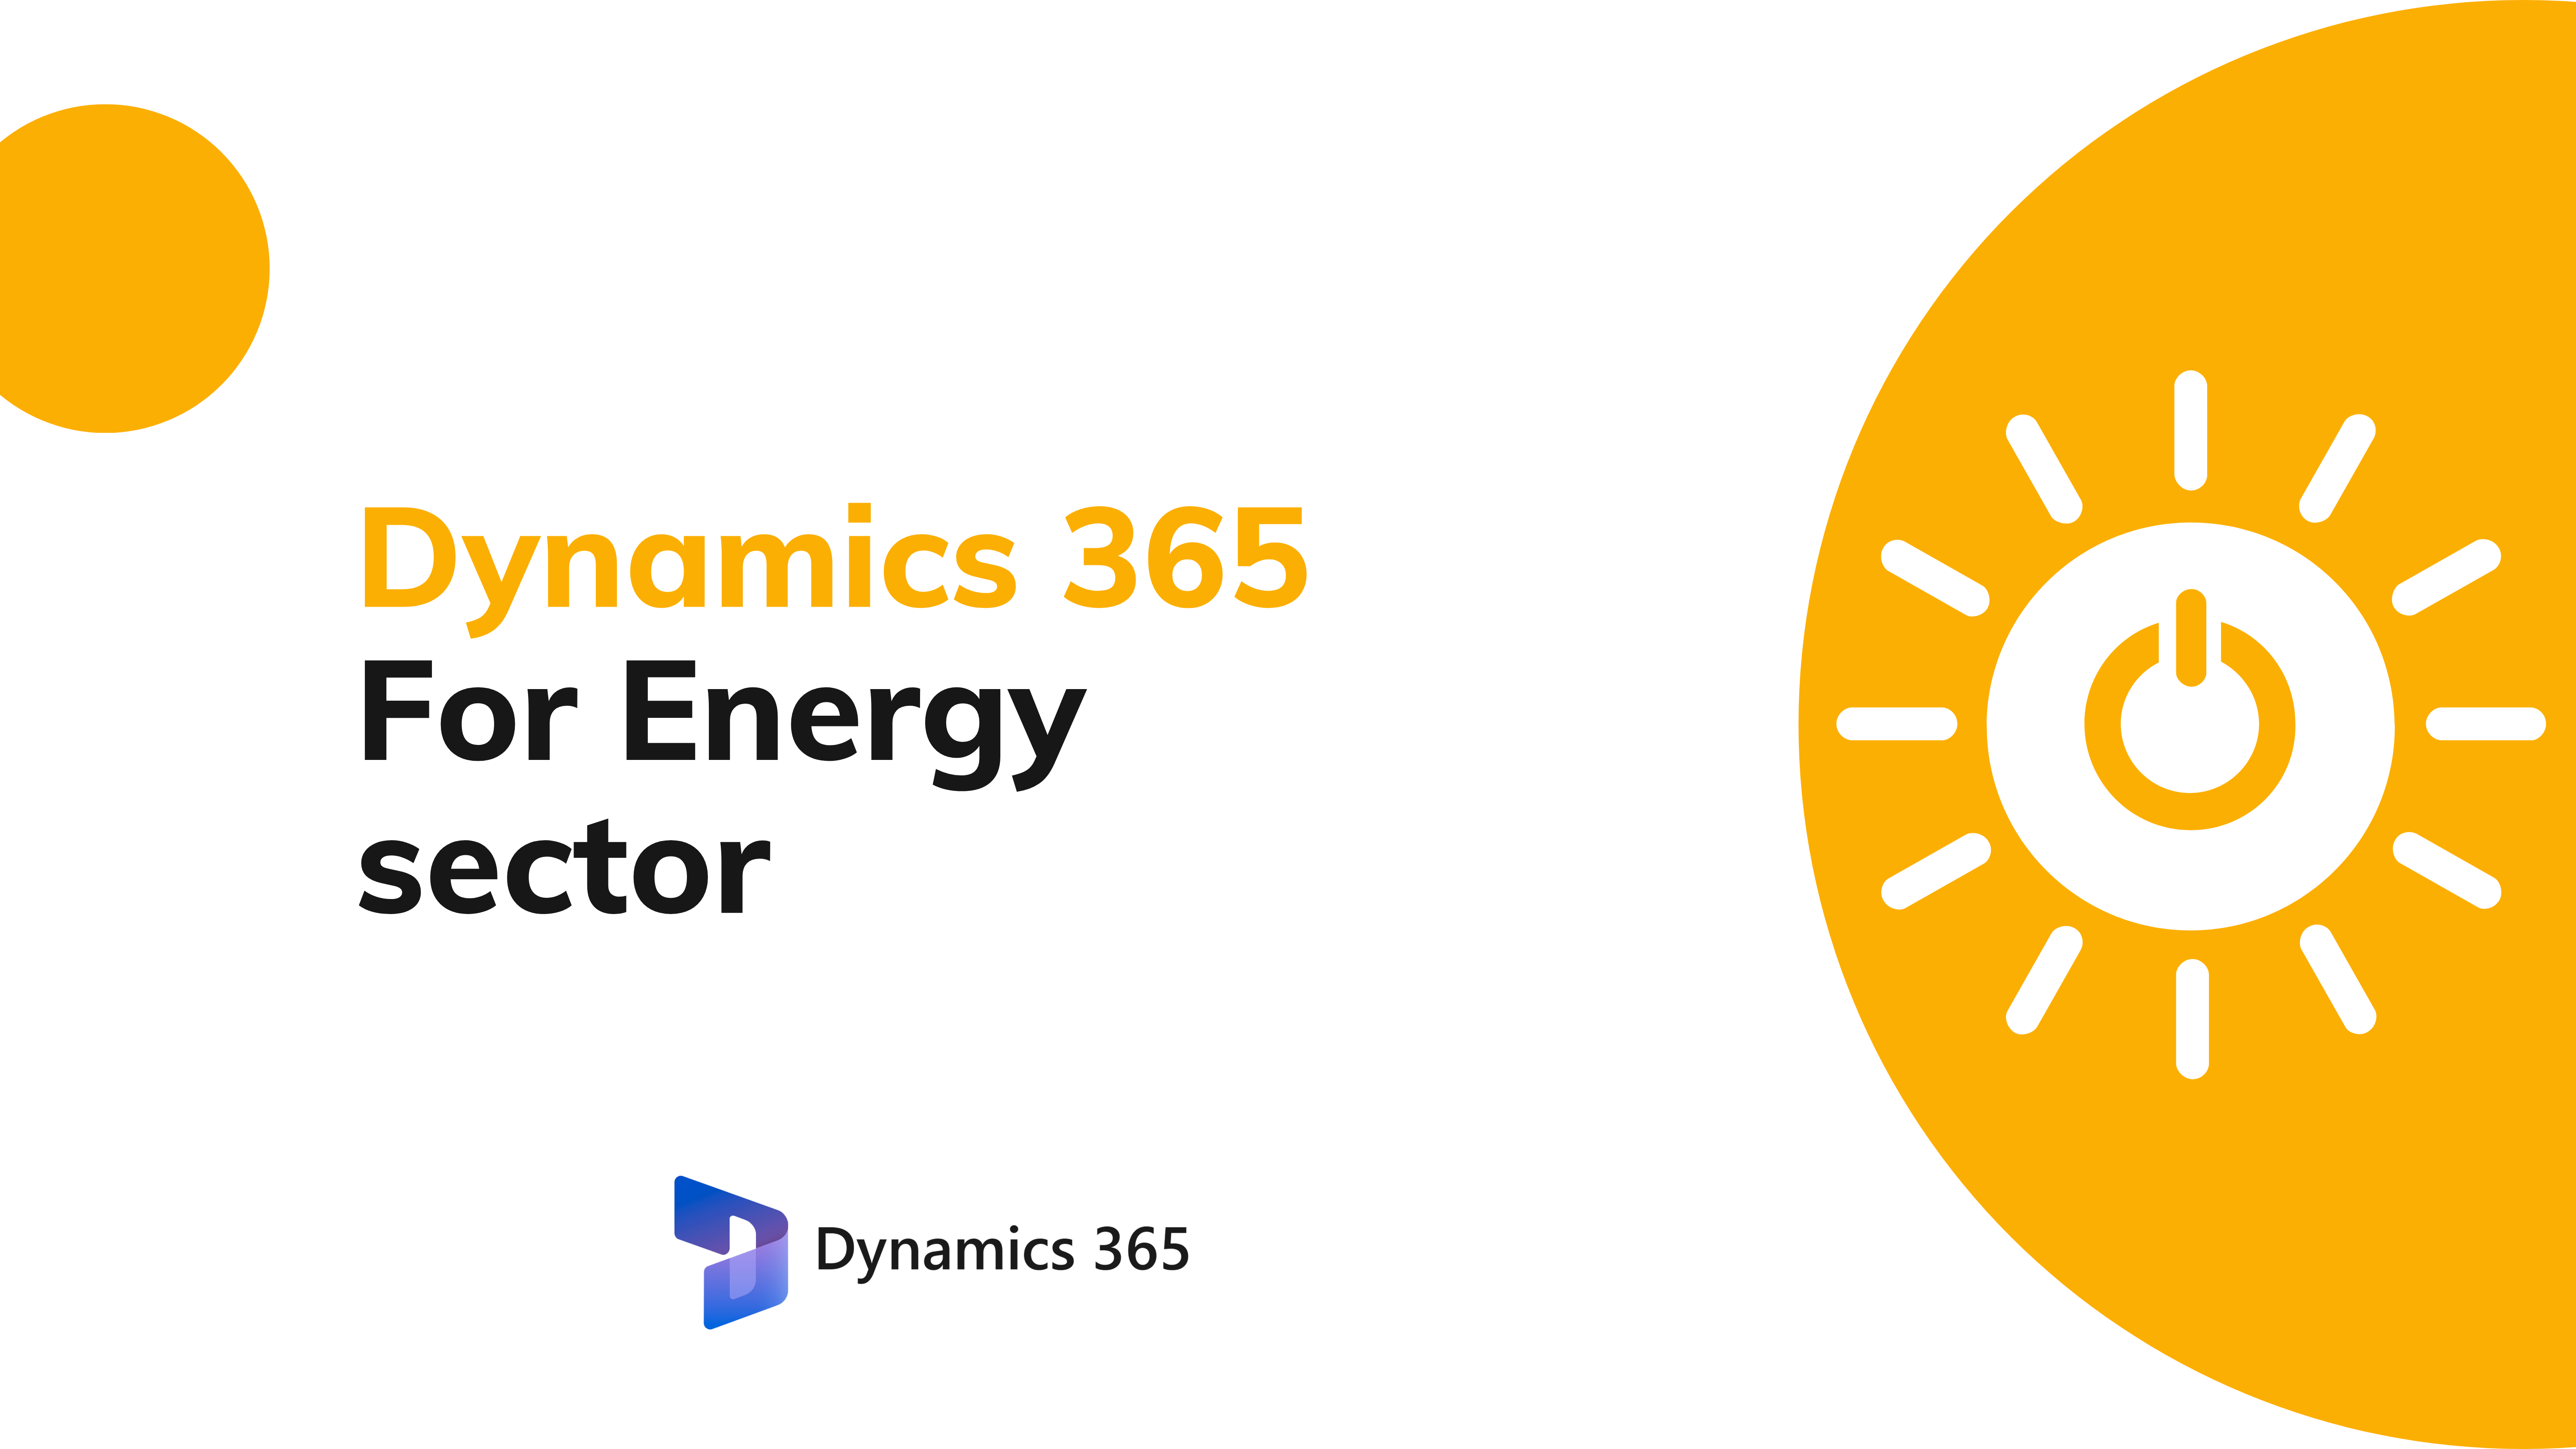 Microsoft Dynamics 365 For Energy sector